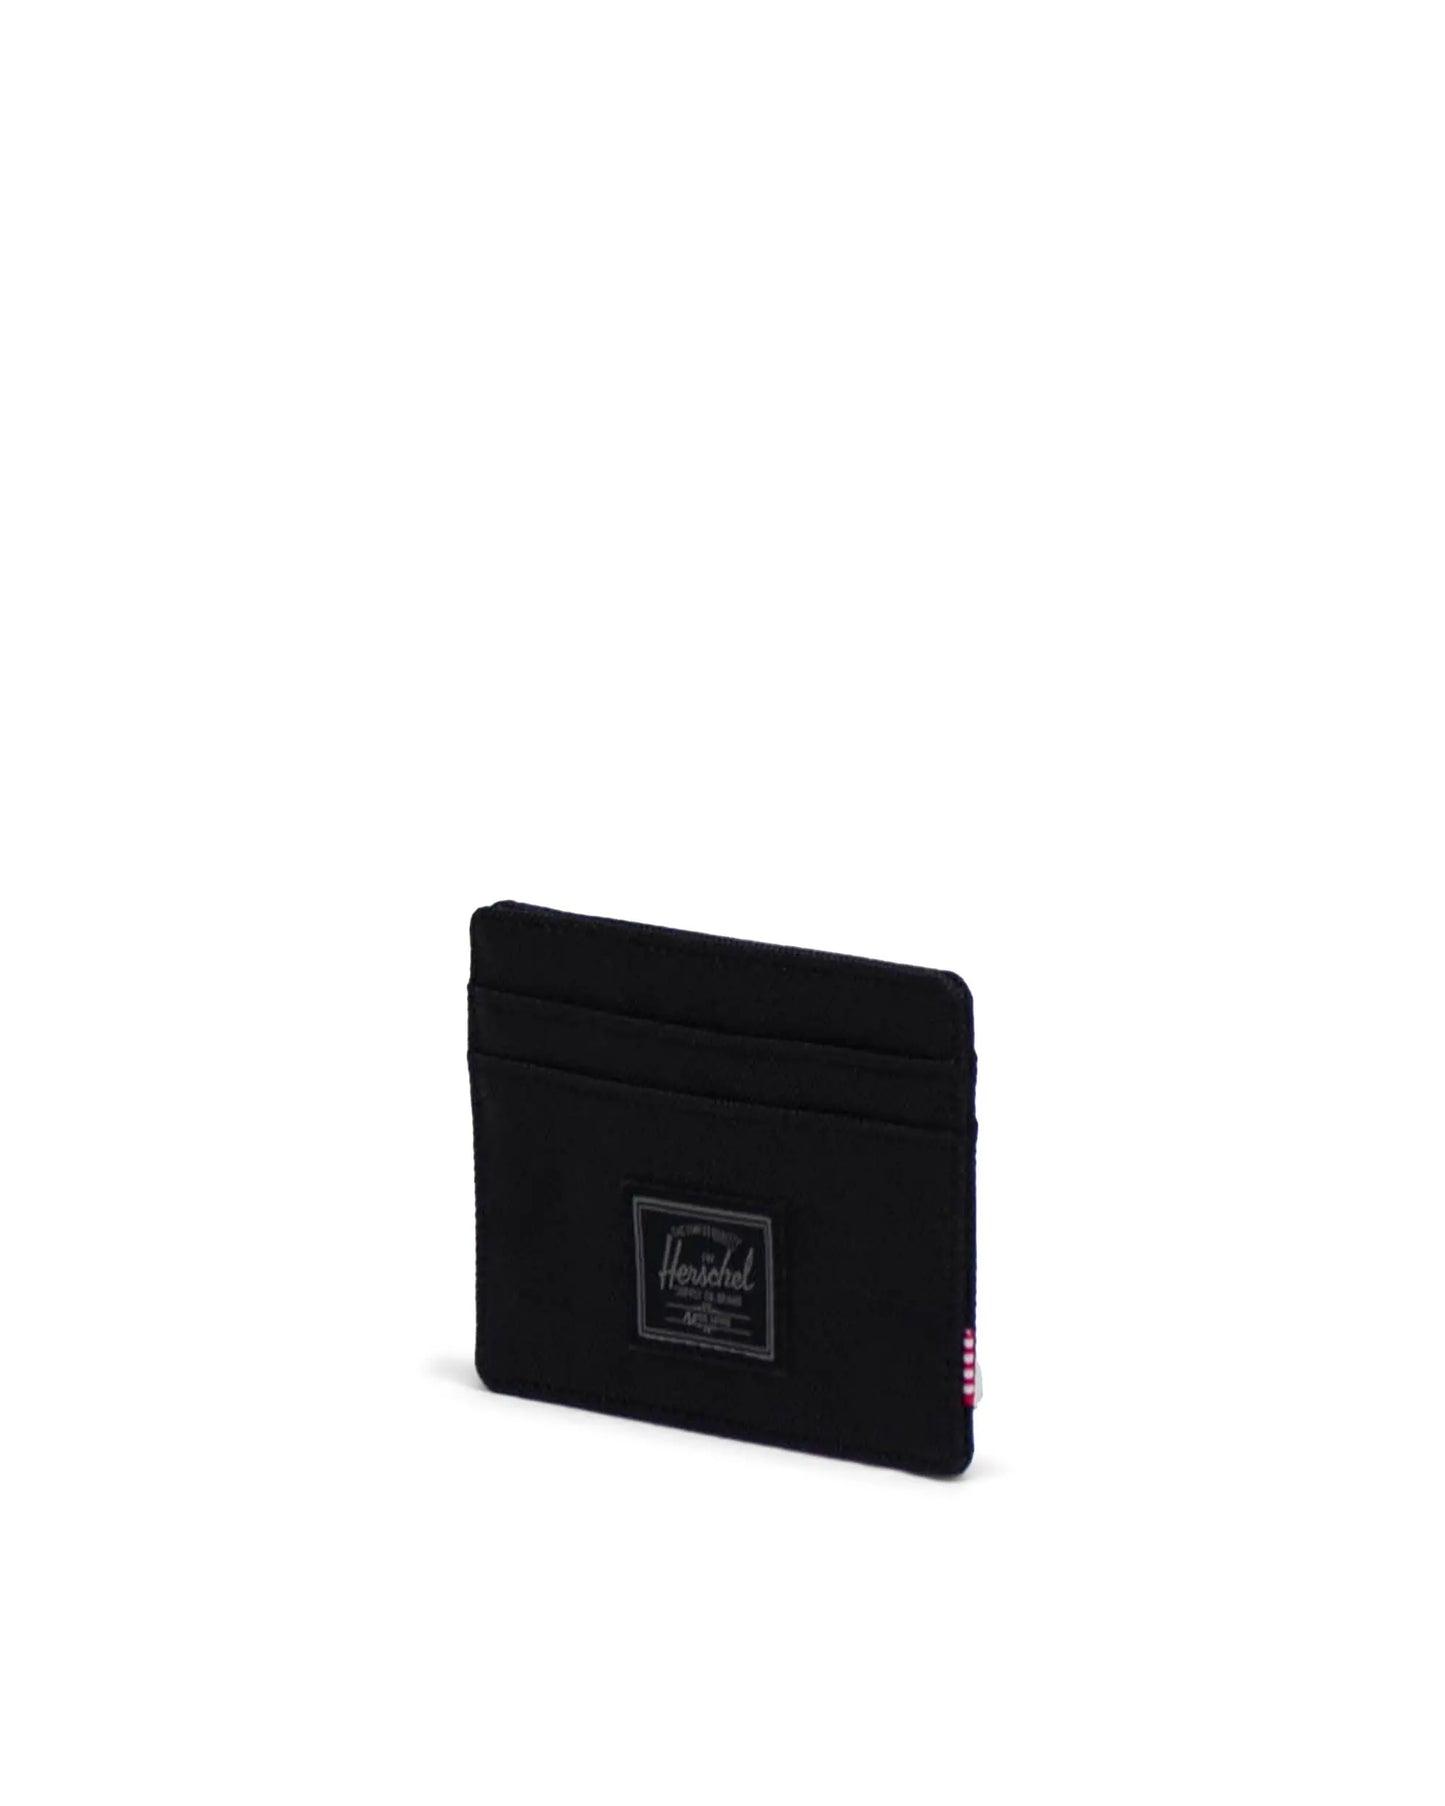 Herschel "Charlie Cardholder Wallet" - Black Tonal